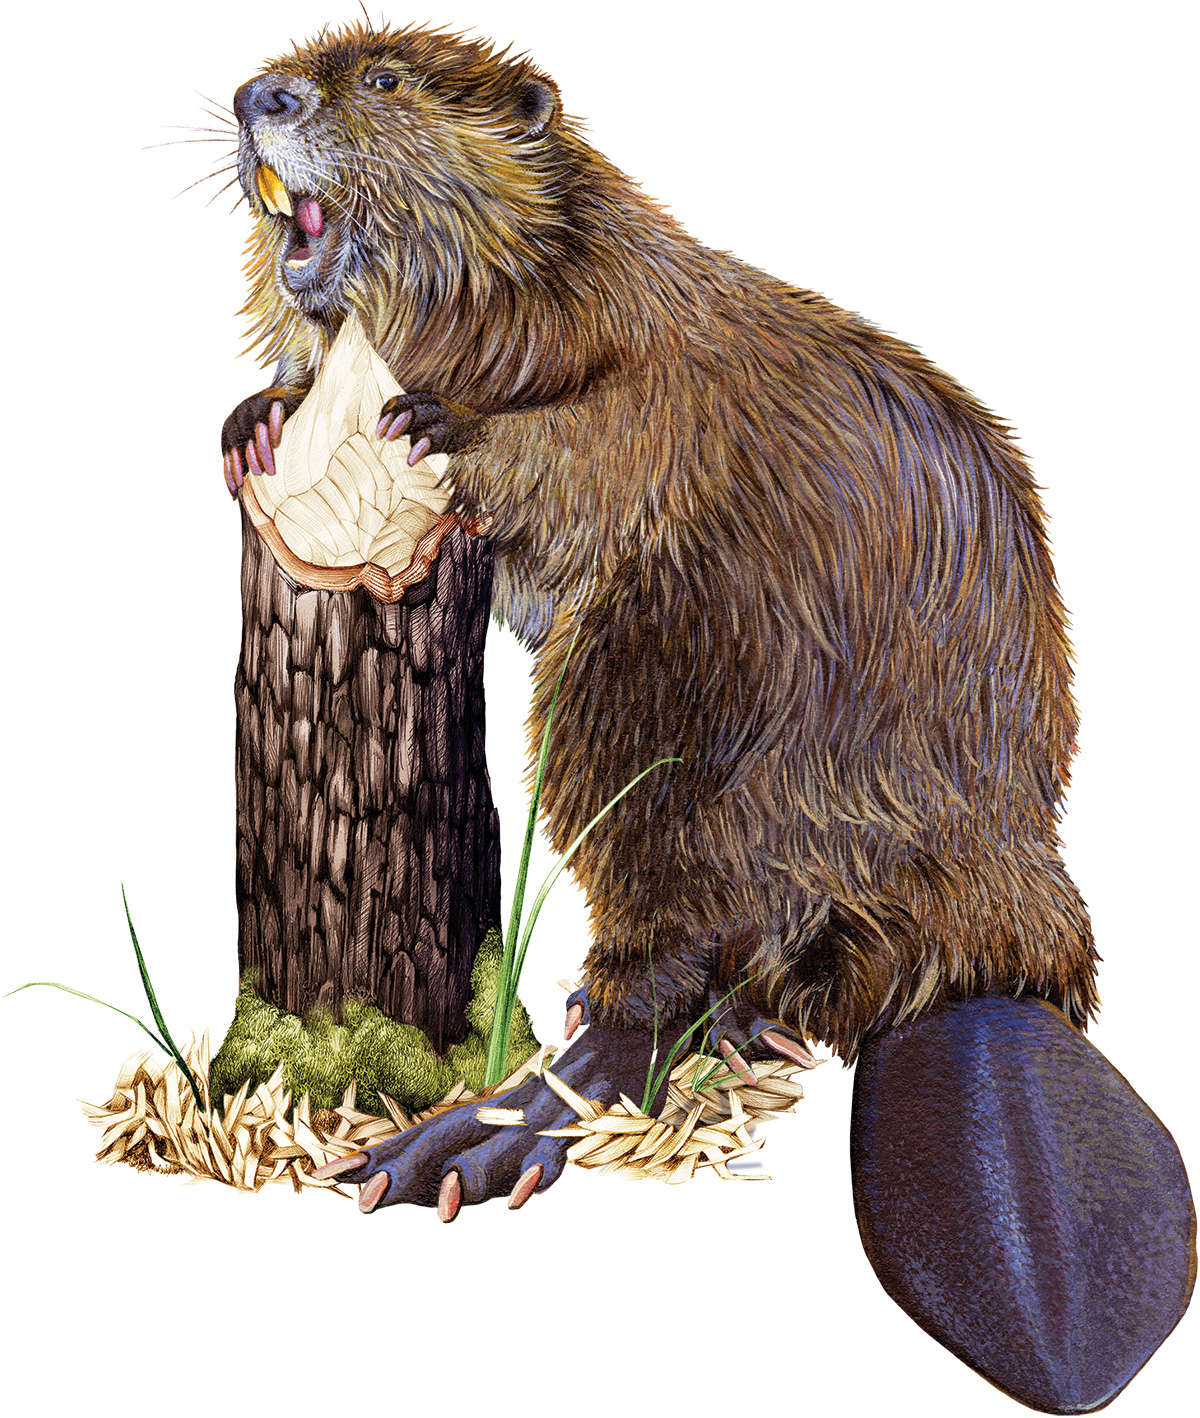 american beaver